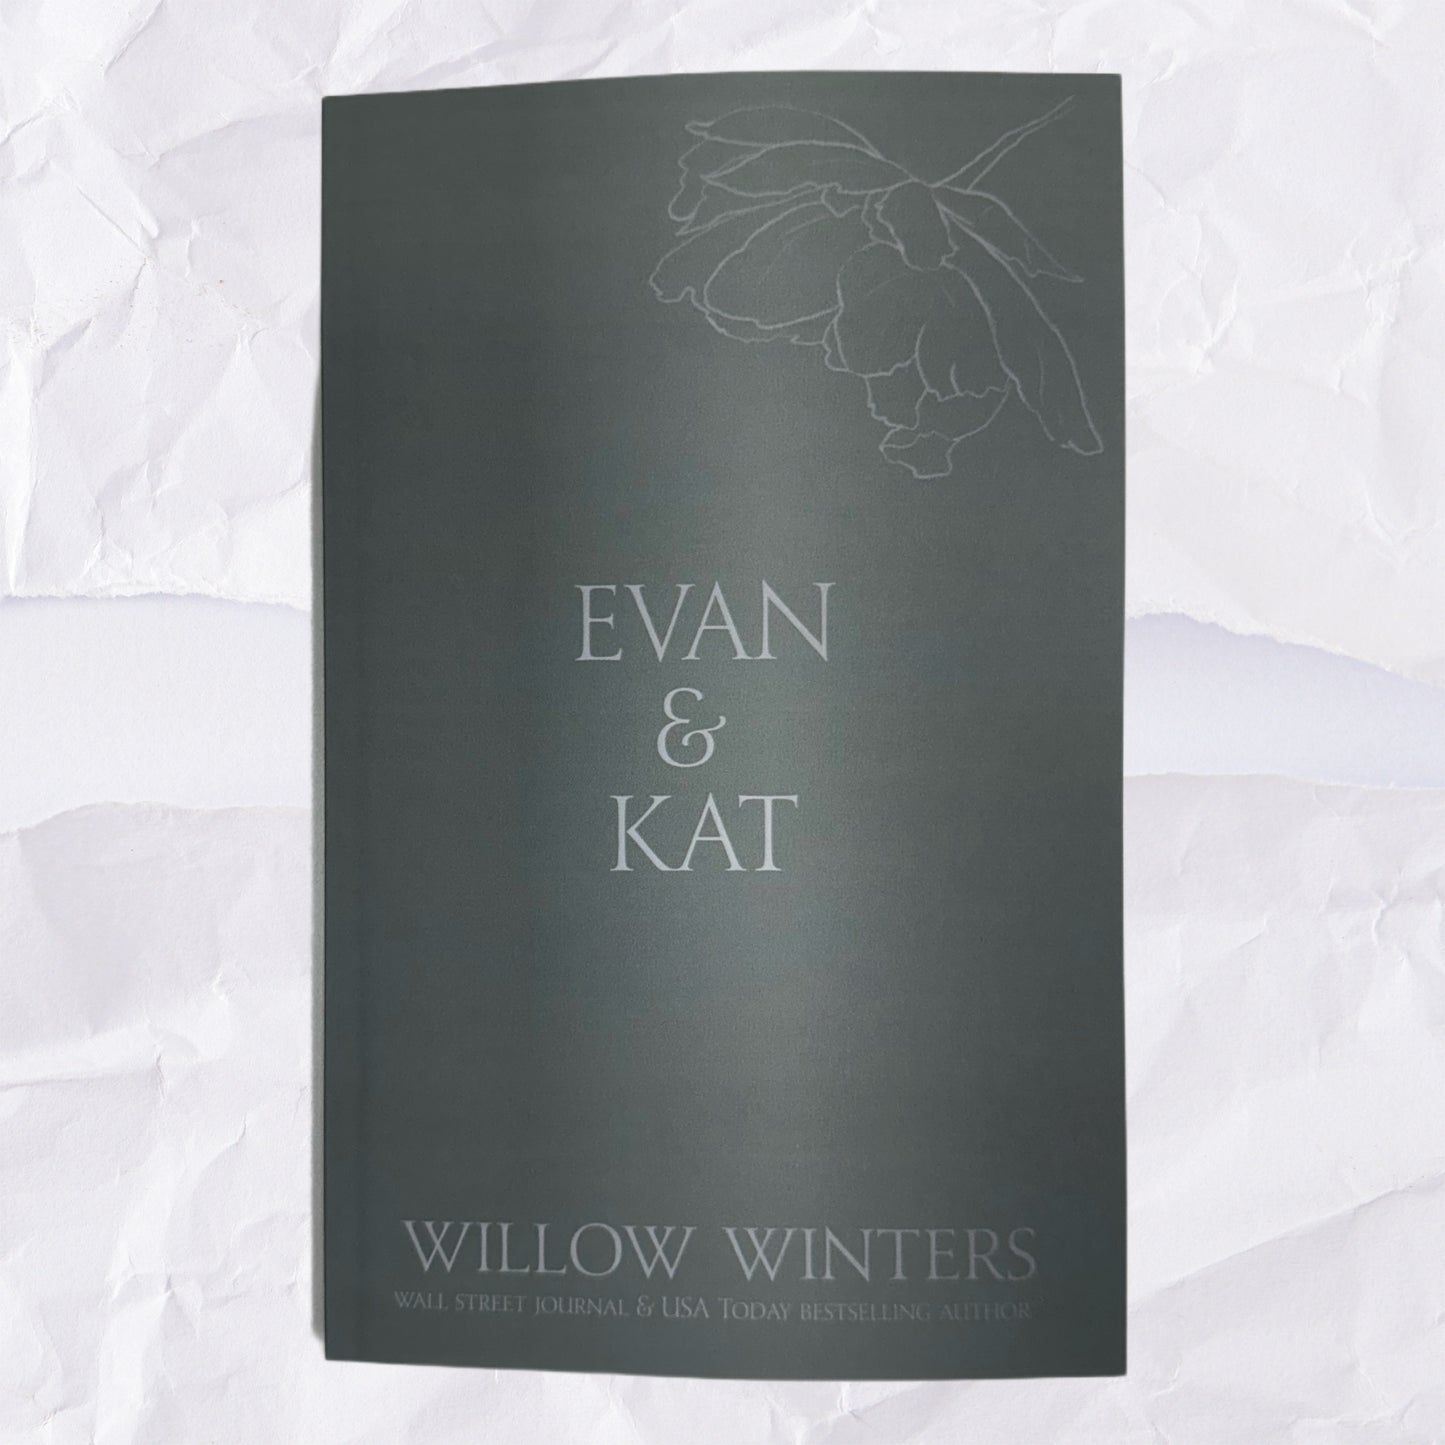 25) Evan & Kat 2: Discreet Series by Willow Winters